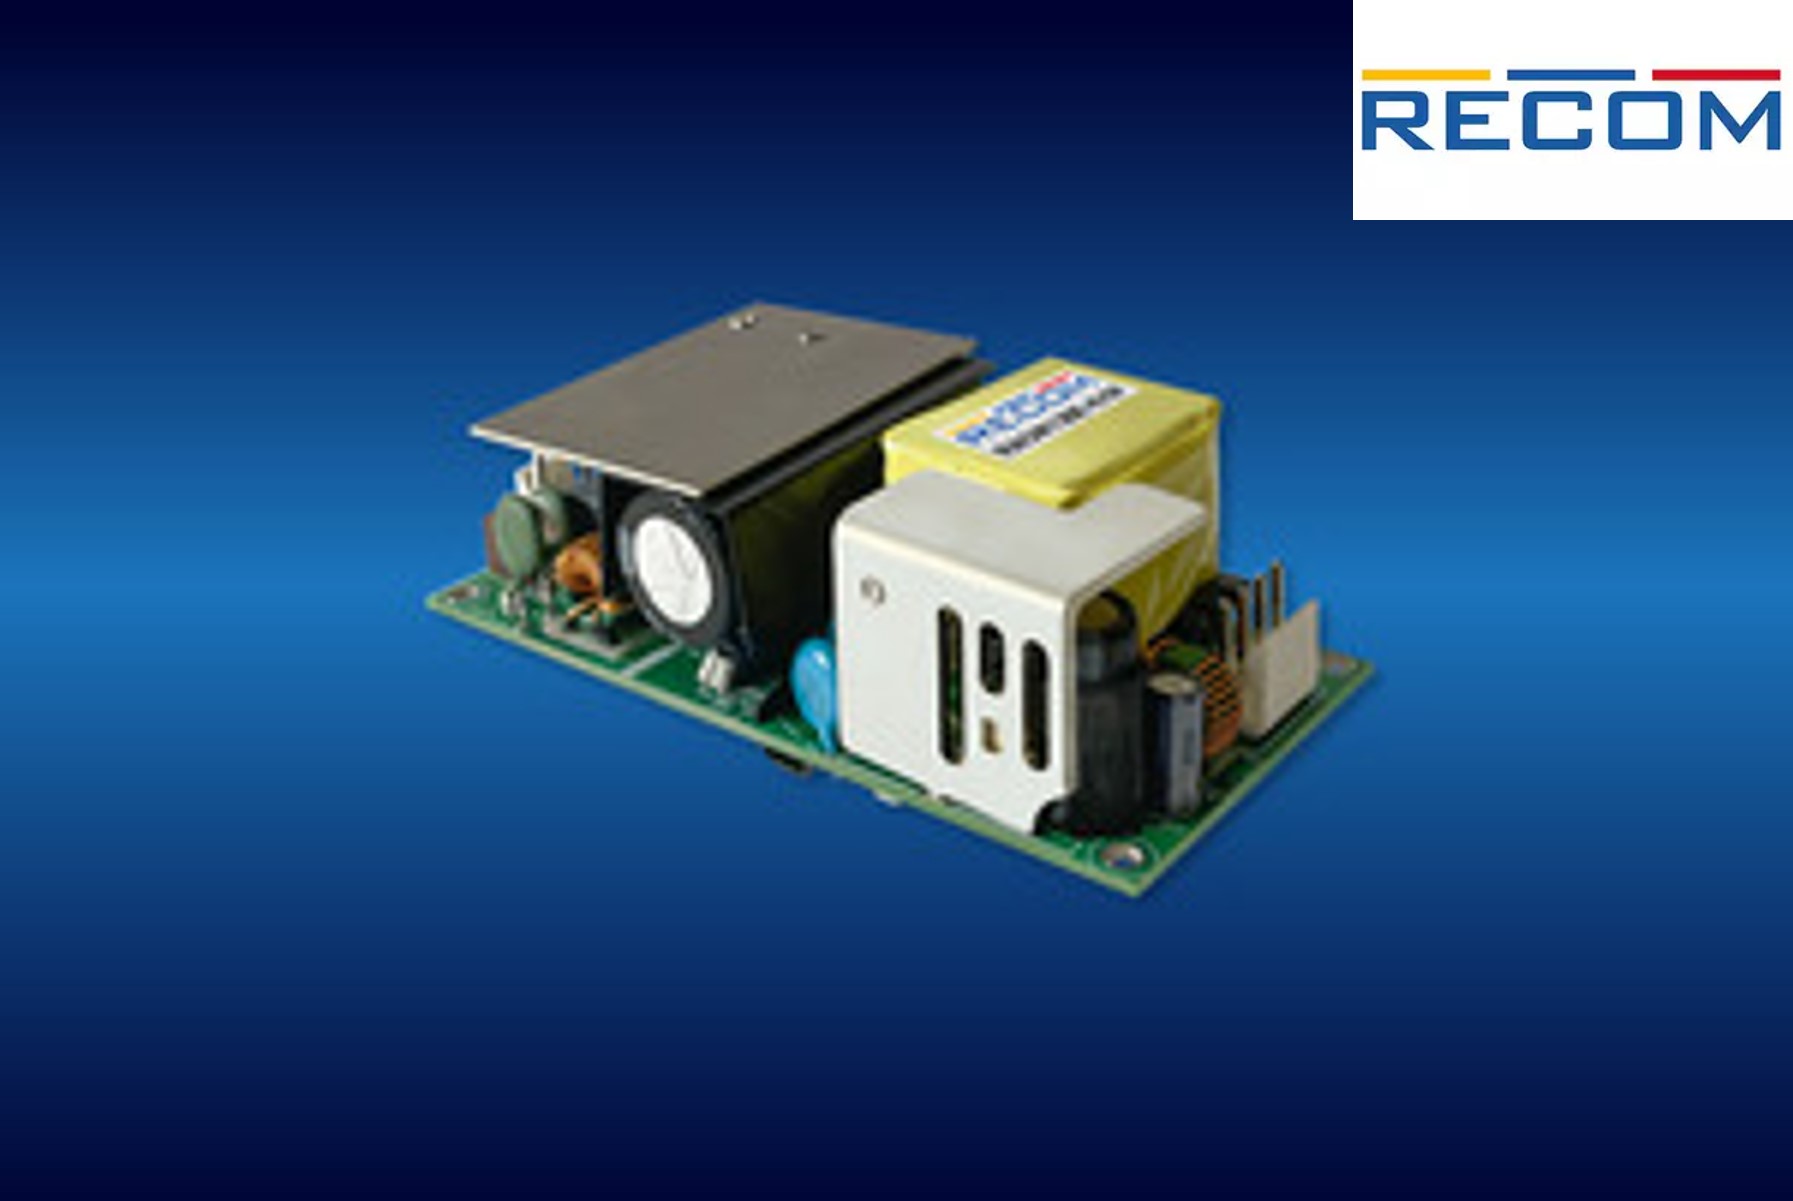 Recom adds RACM130E-K AC/DC with 130W peak output